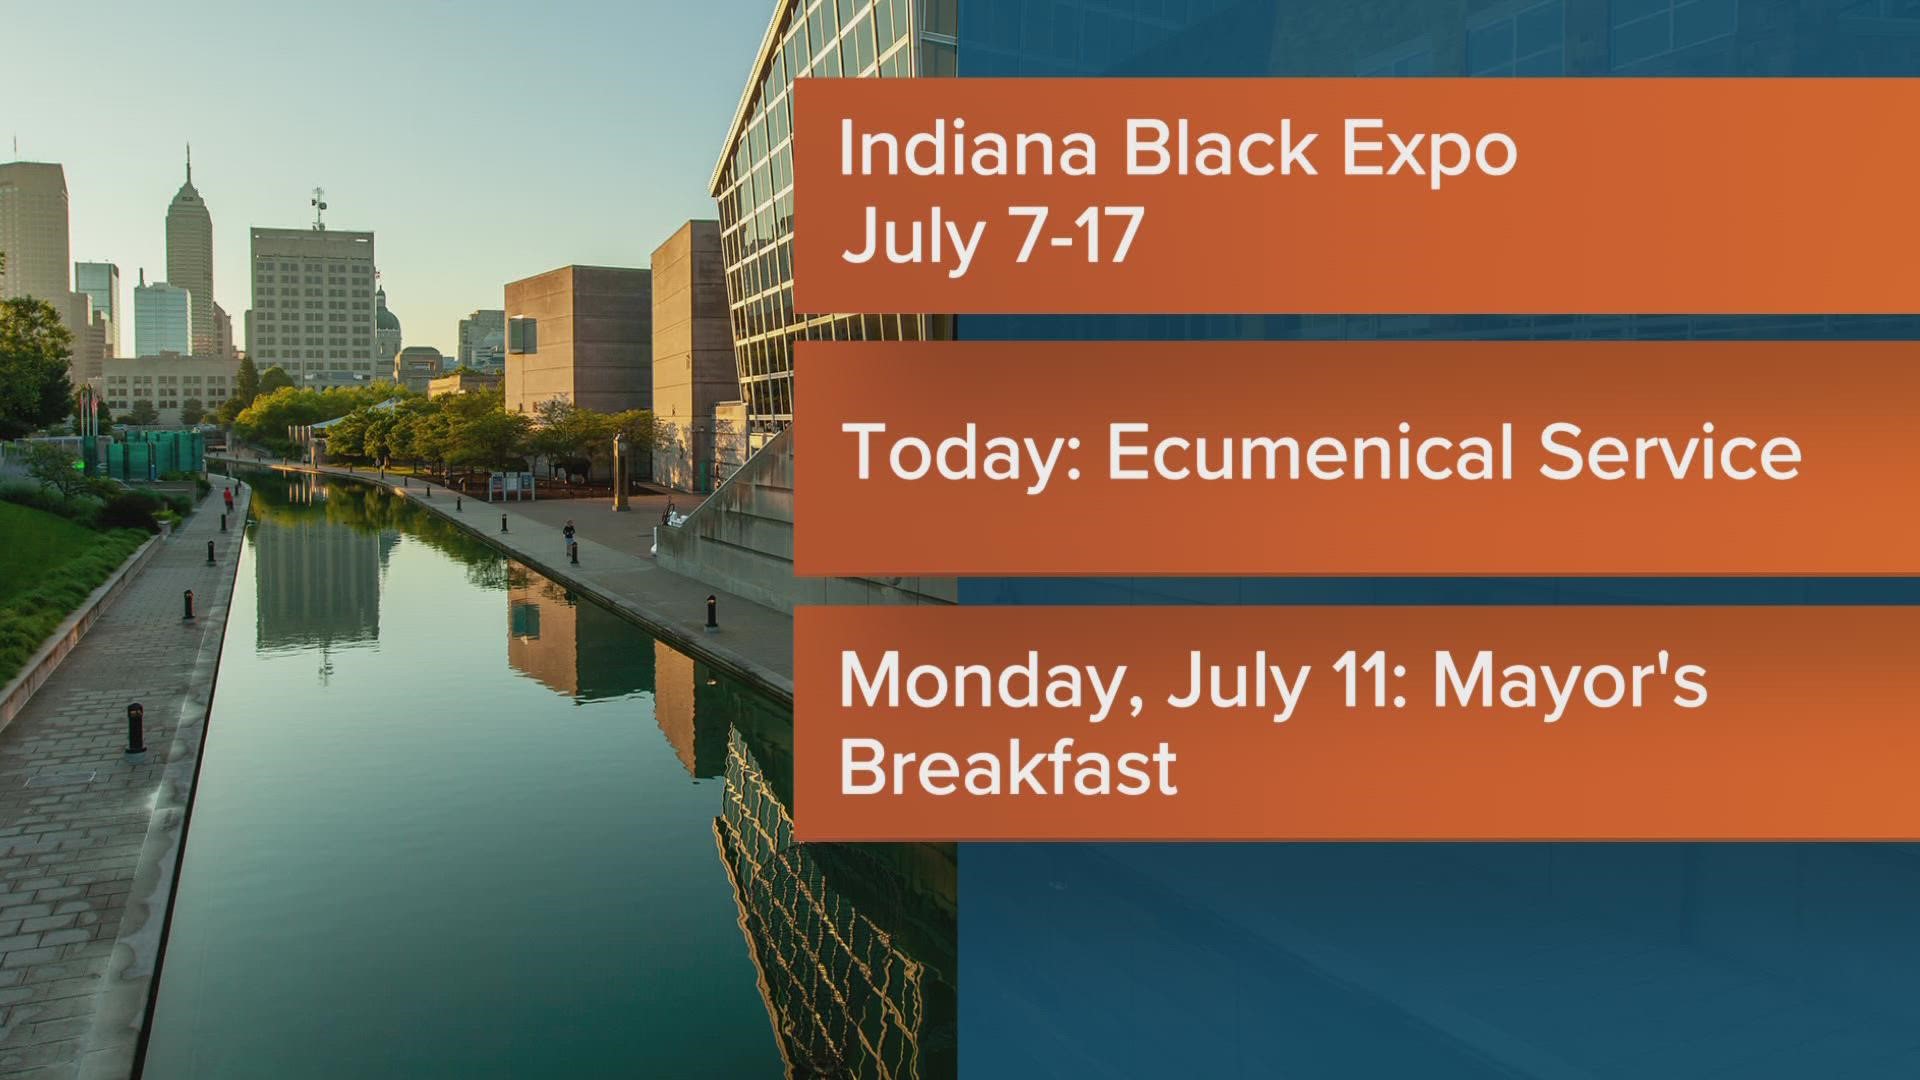 Indiana Black Expo is celebrating its 51st Summer Celebration this year.